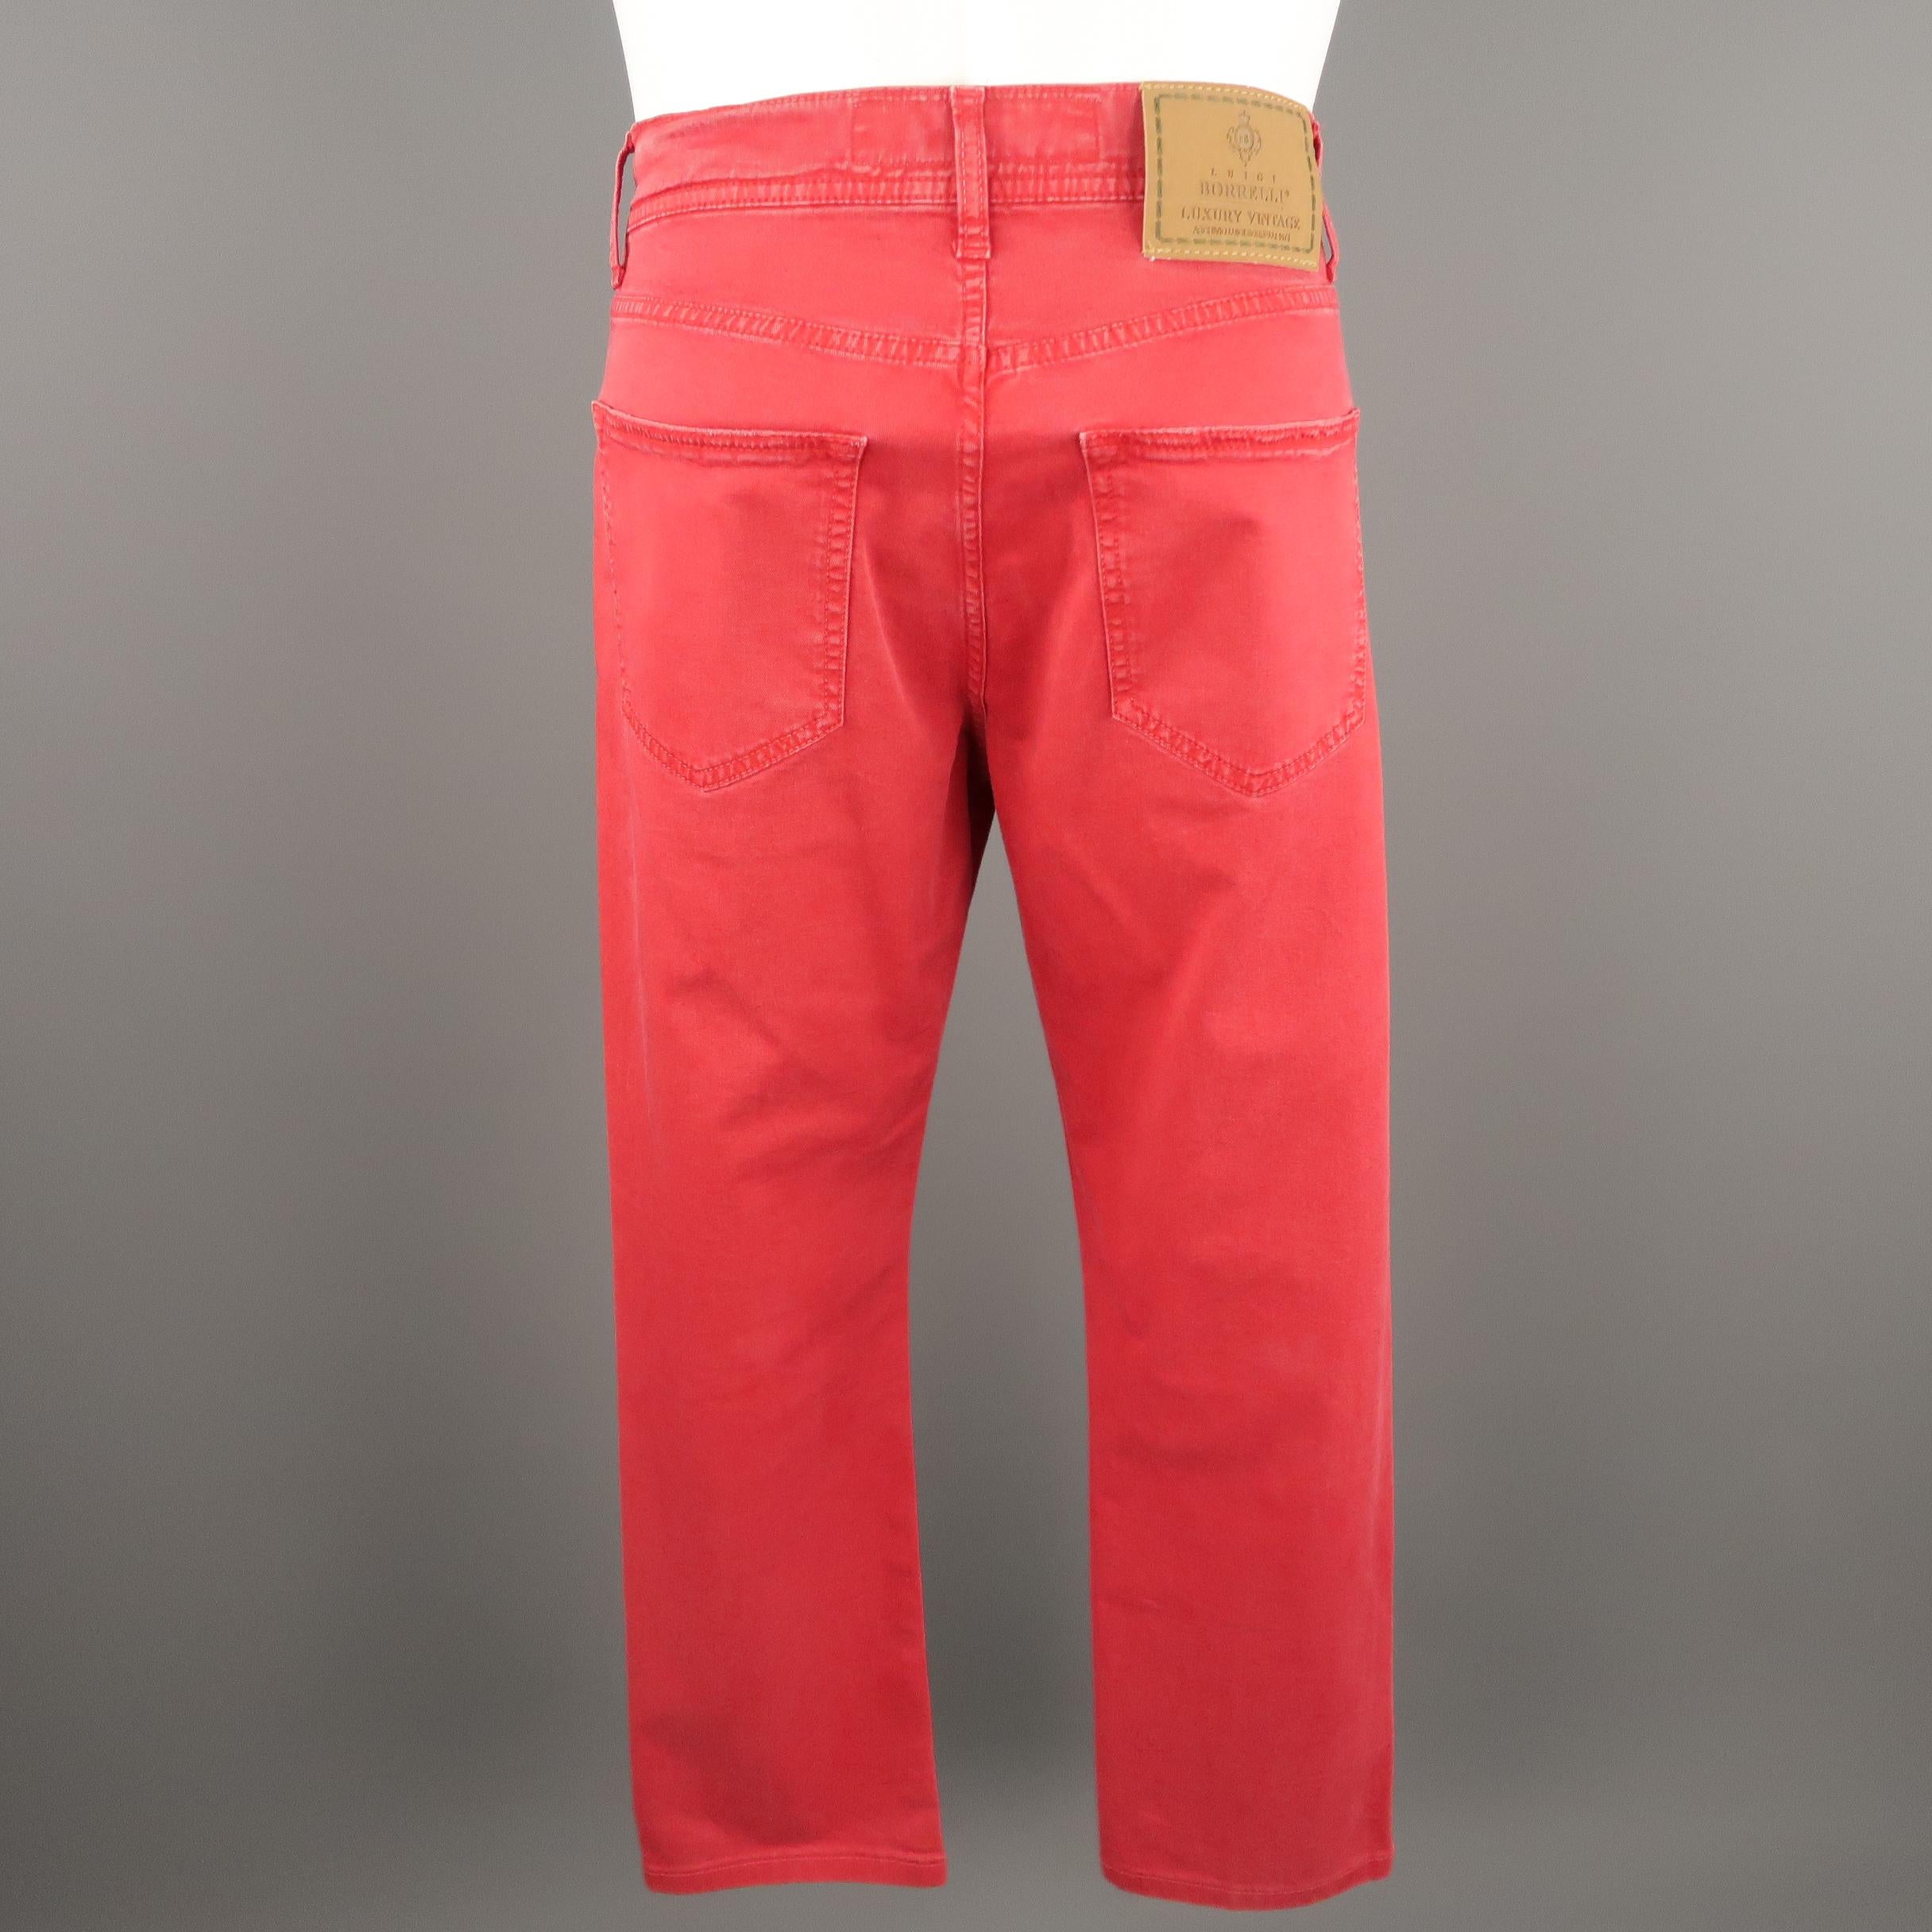 BORRELLI Size 32 Red Washed Denim Jeans 1